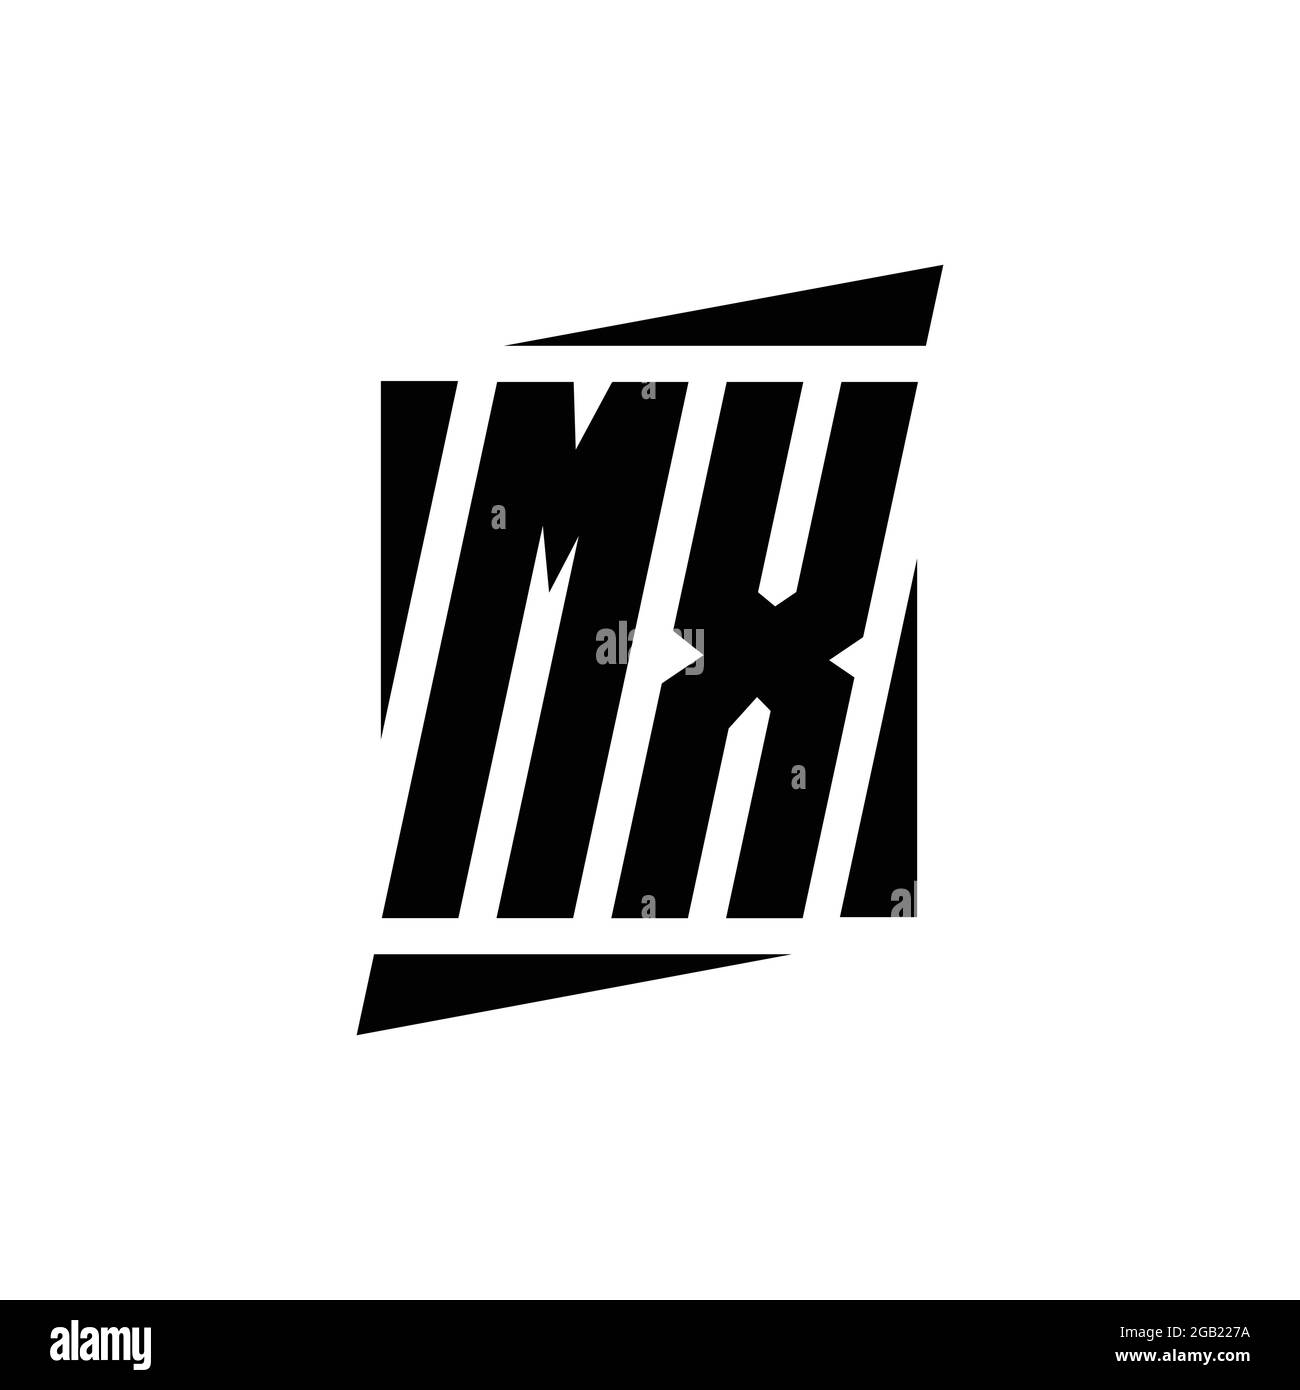 MCM abstract monogram shield logo design on black background. MCM